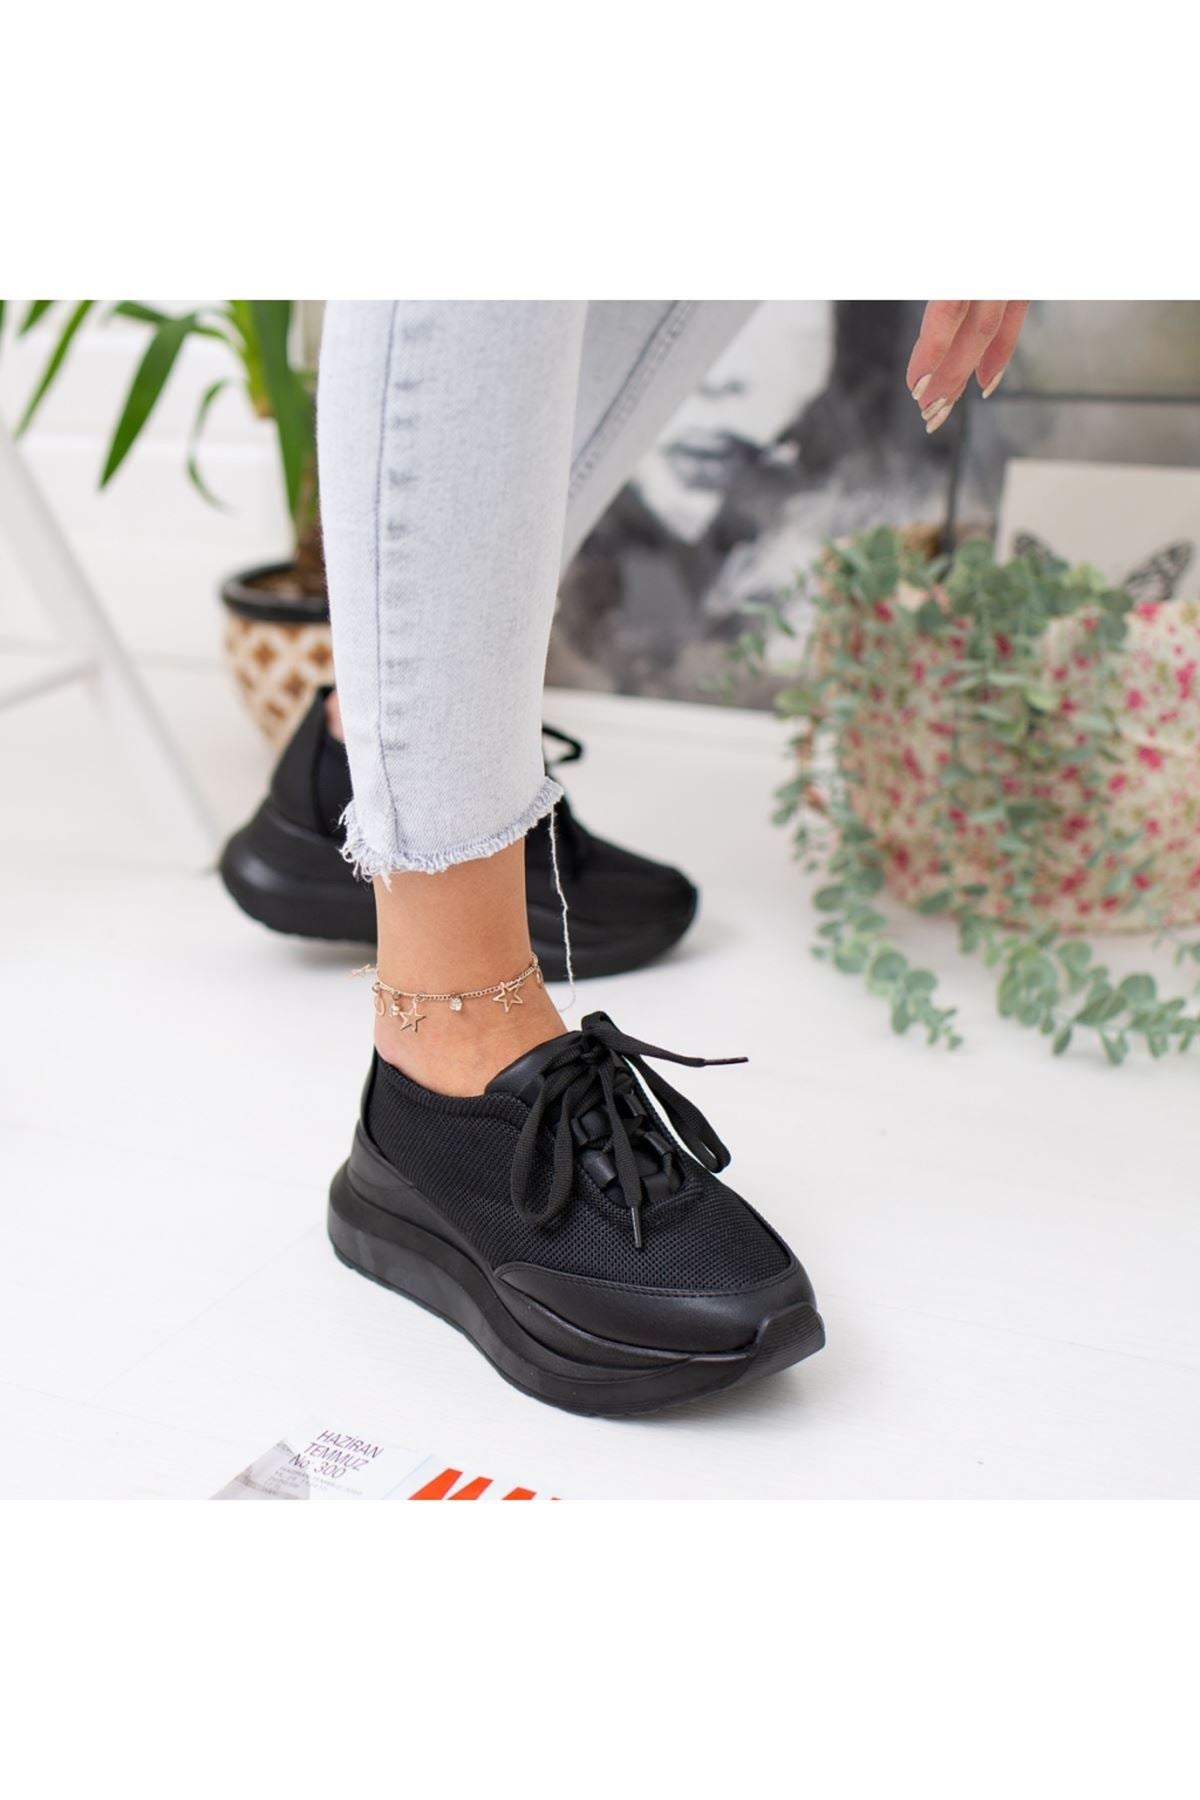 Women's Rojek Black Sneakers Shoes - STREETMODE™